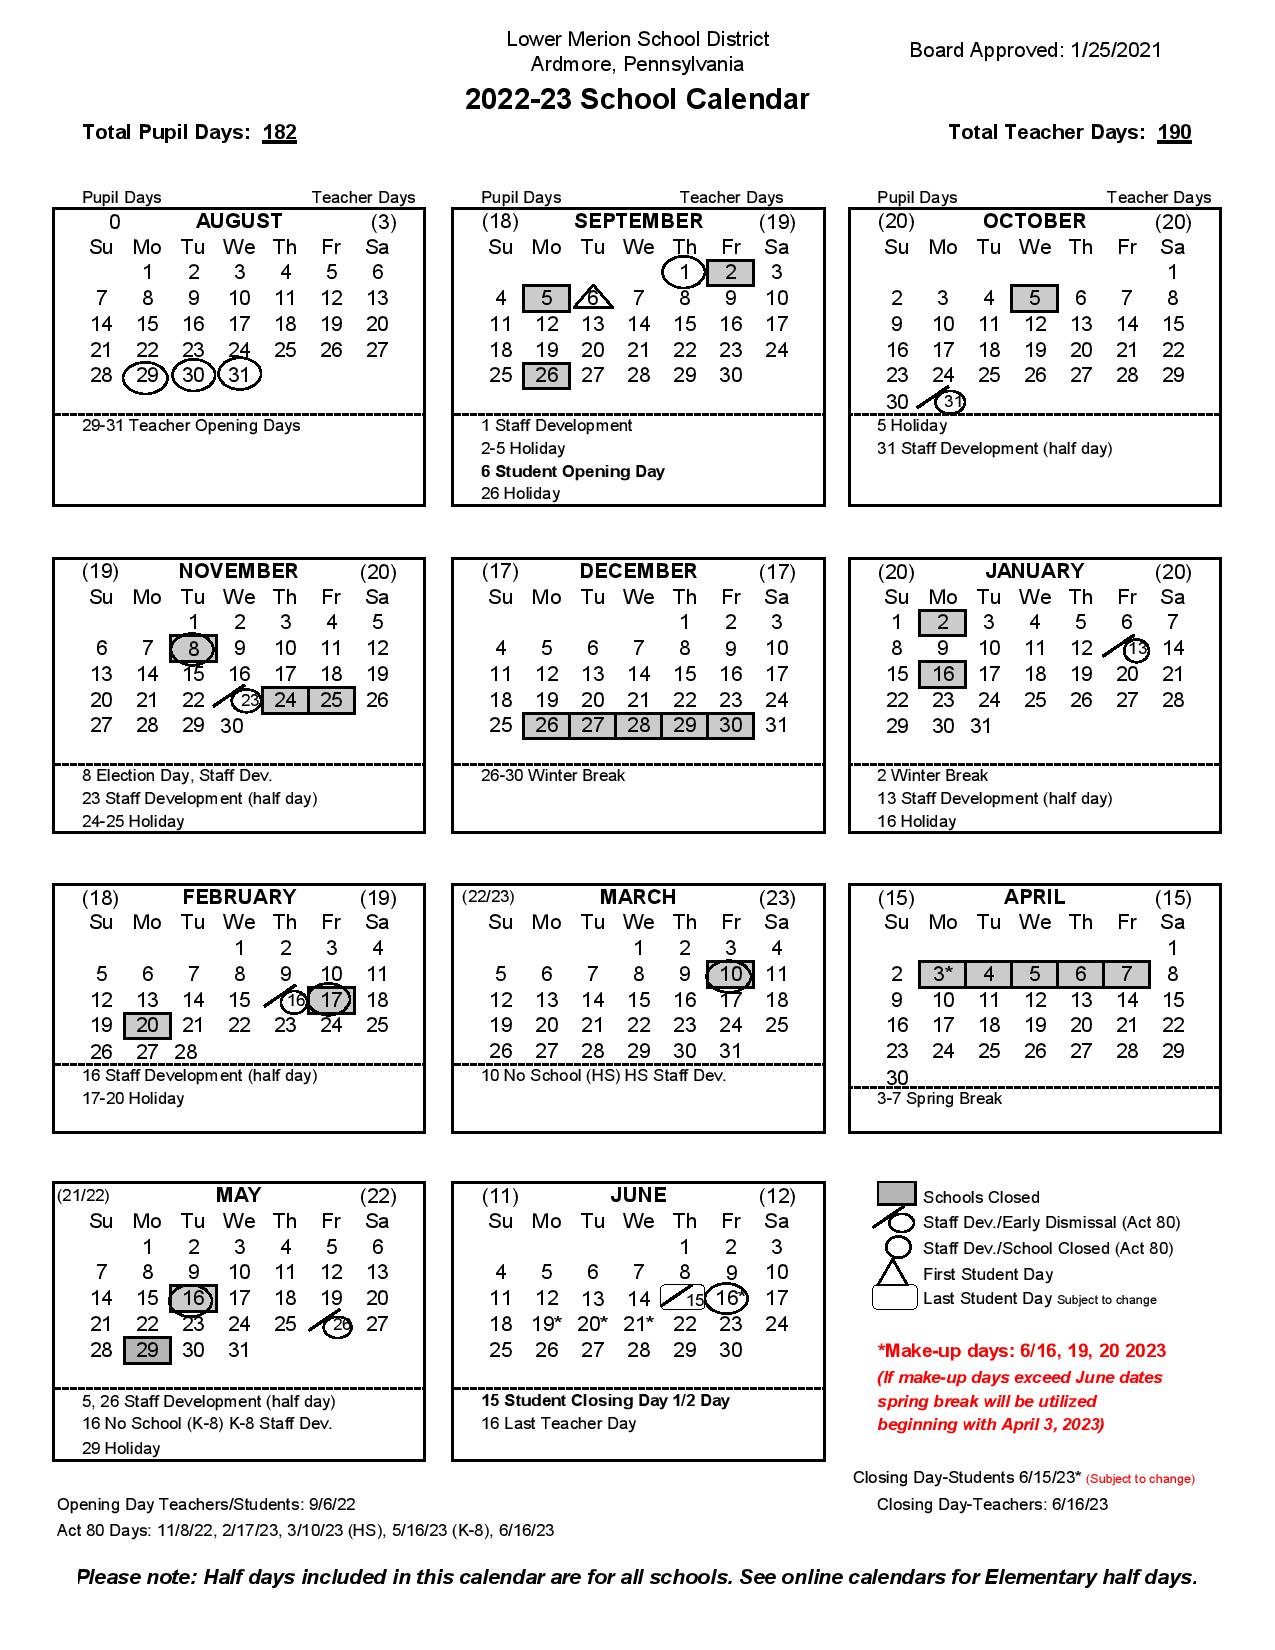 Lower Merion School District Calendar 2022 2023 in PDF